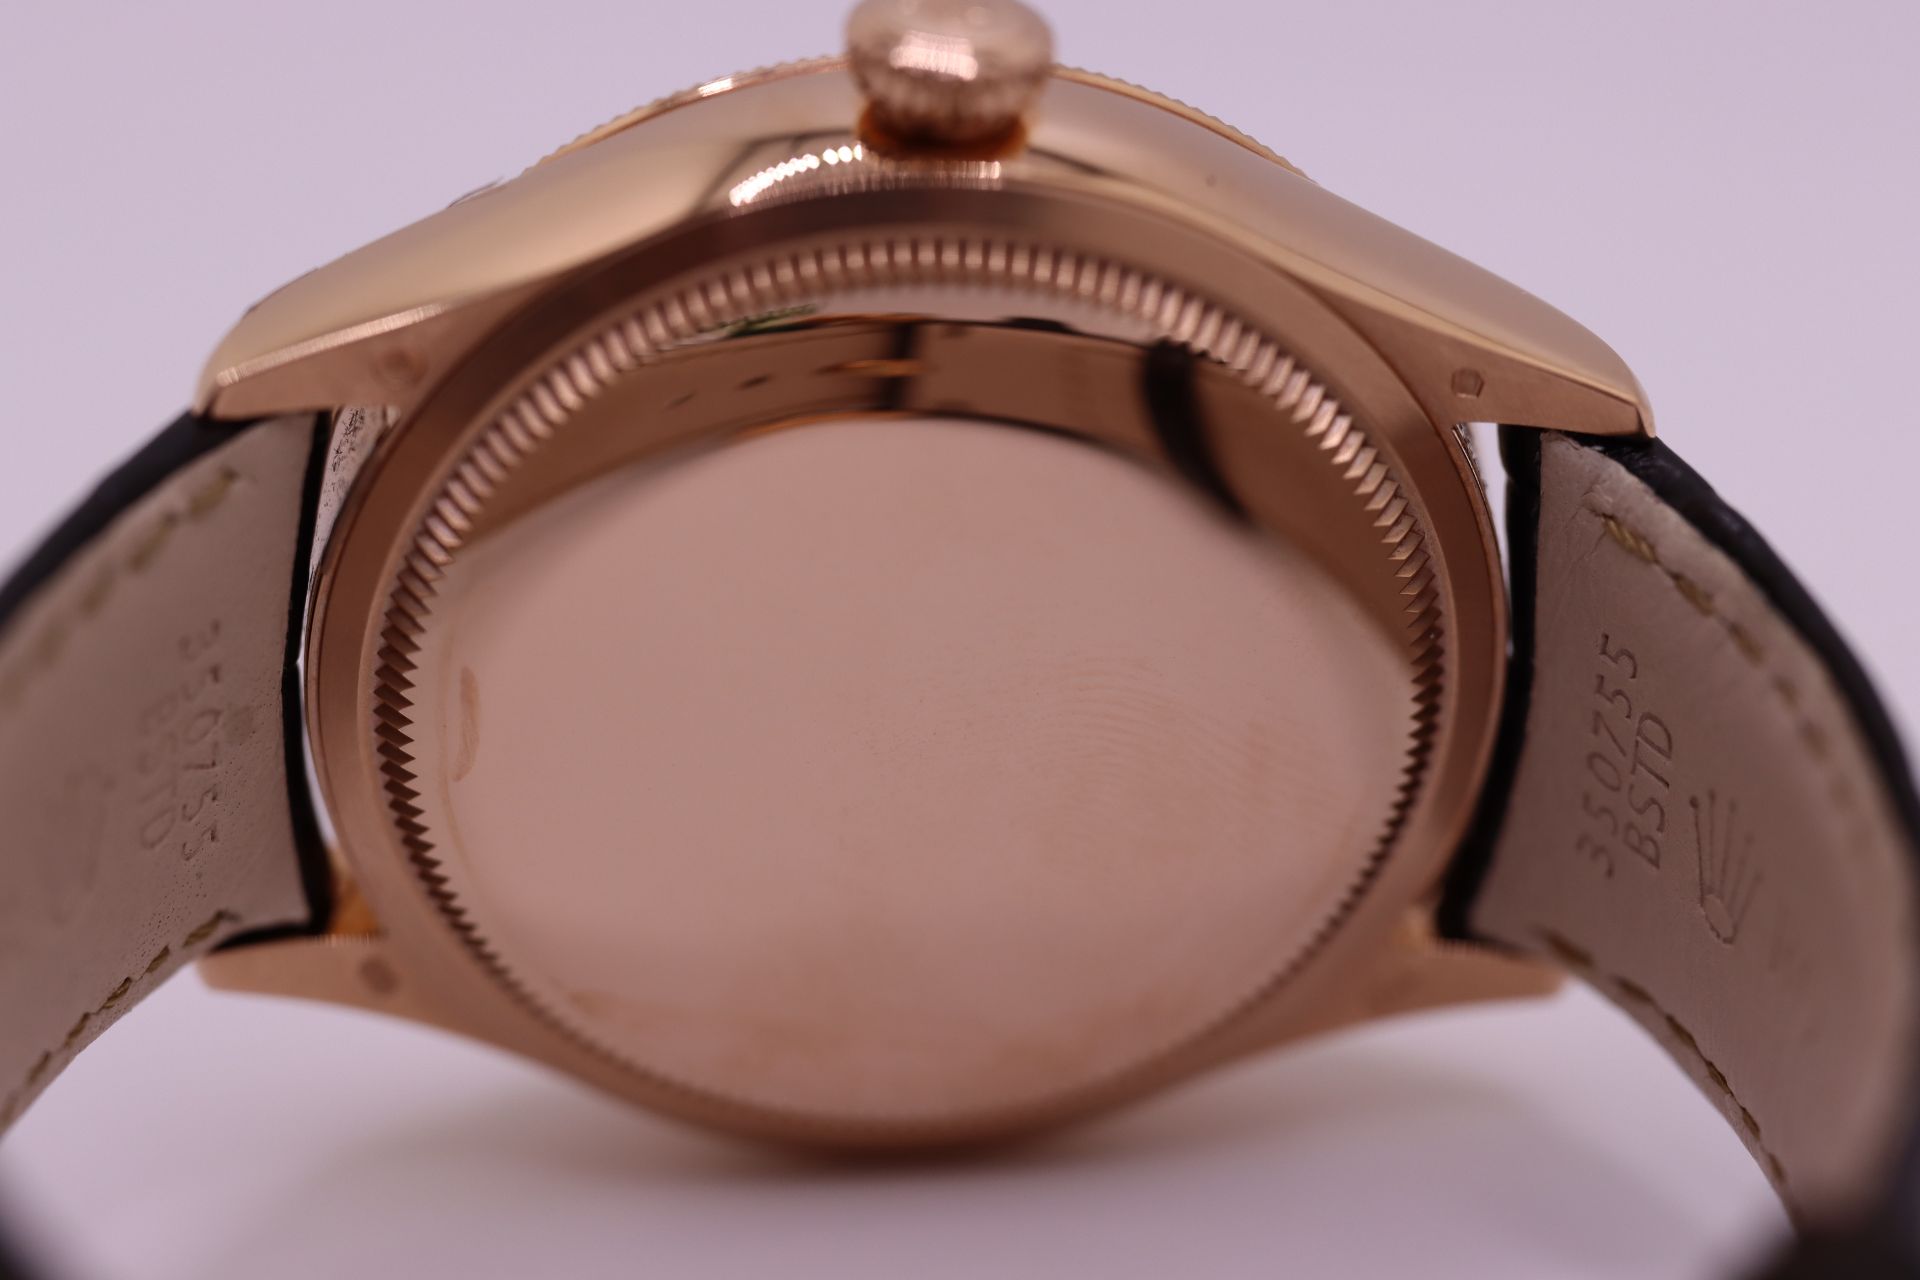 Rolex Cellini Date Everose Gold Silver Dial 39mm - Alligator Bracelet - Brand New 2022 - Unworn - Image 5 of 23